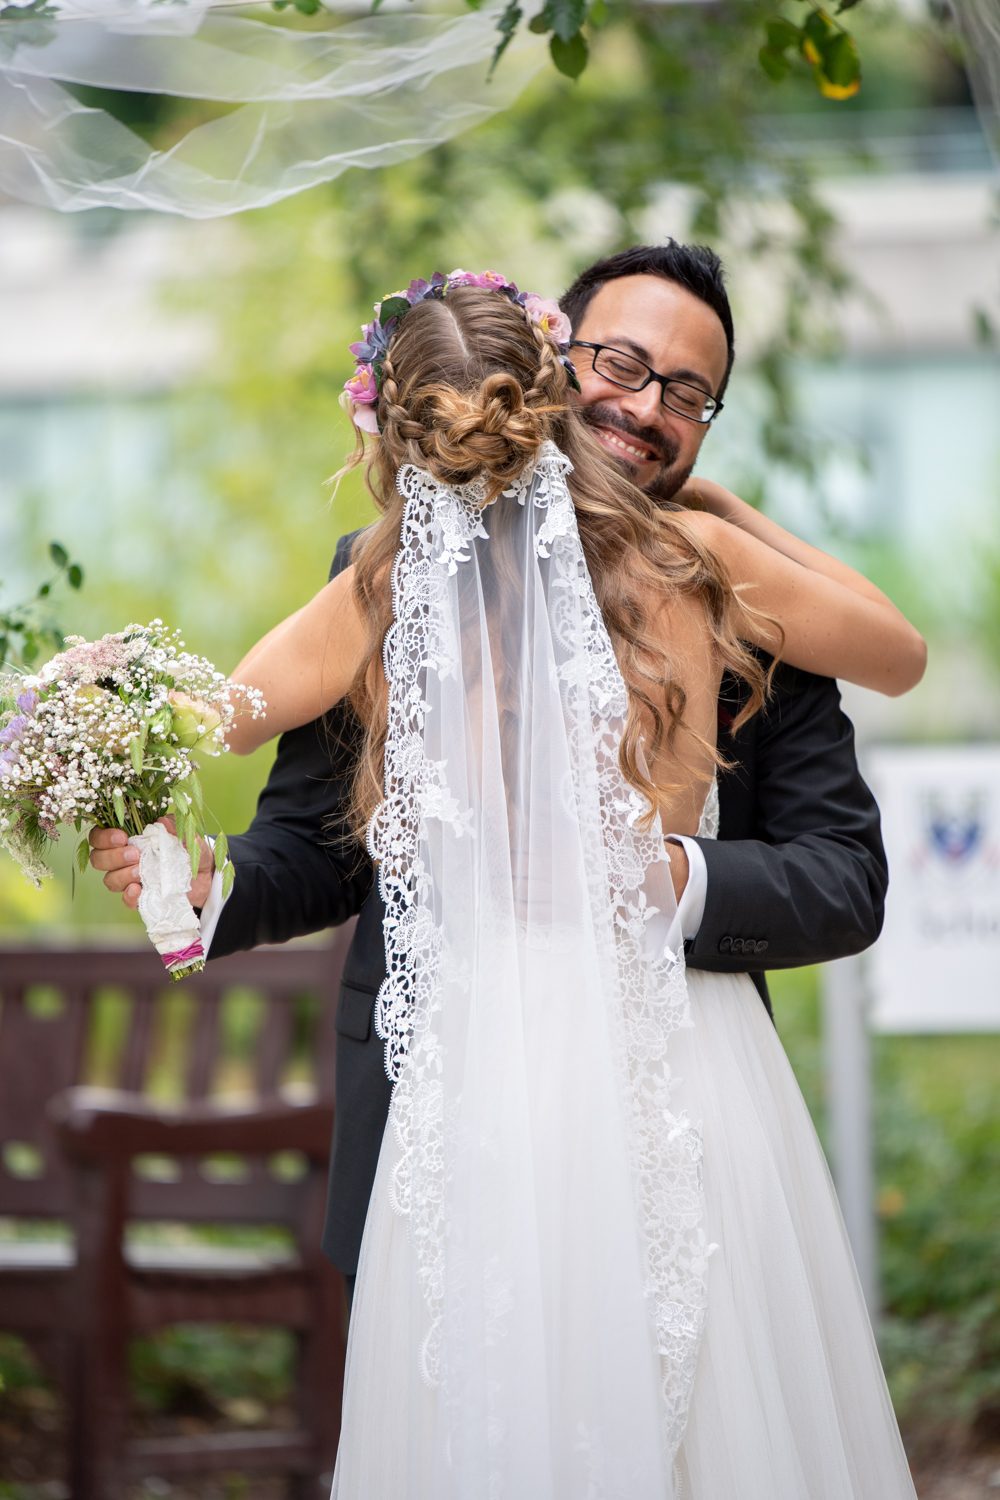 Mirijam-Manuel -Hochzeitsfotograf Böblingen & Hochzeitsbilder Böblingen-